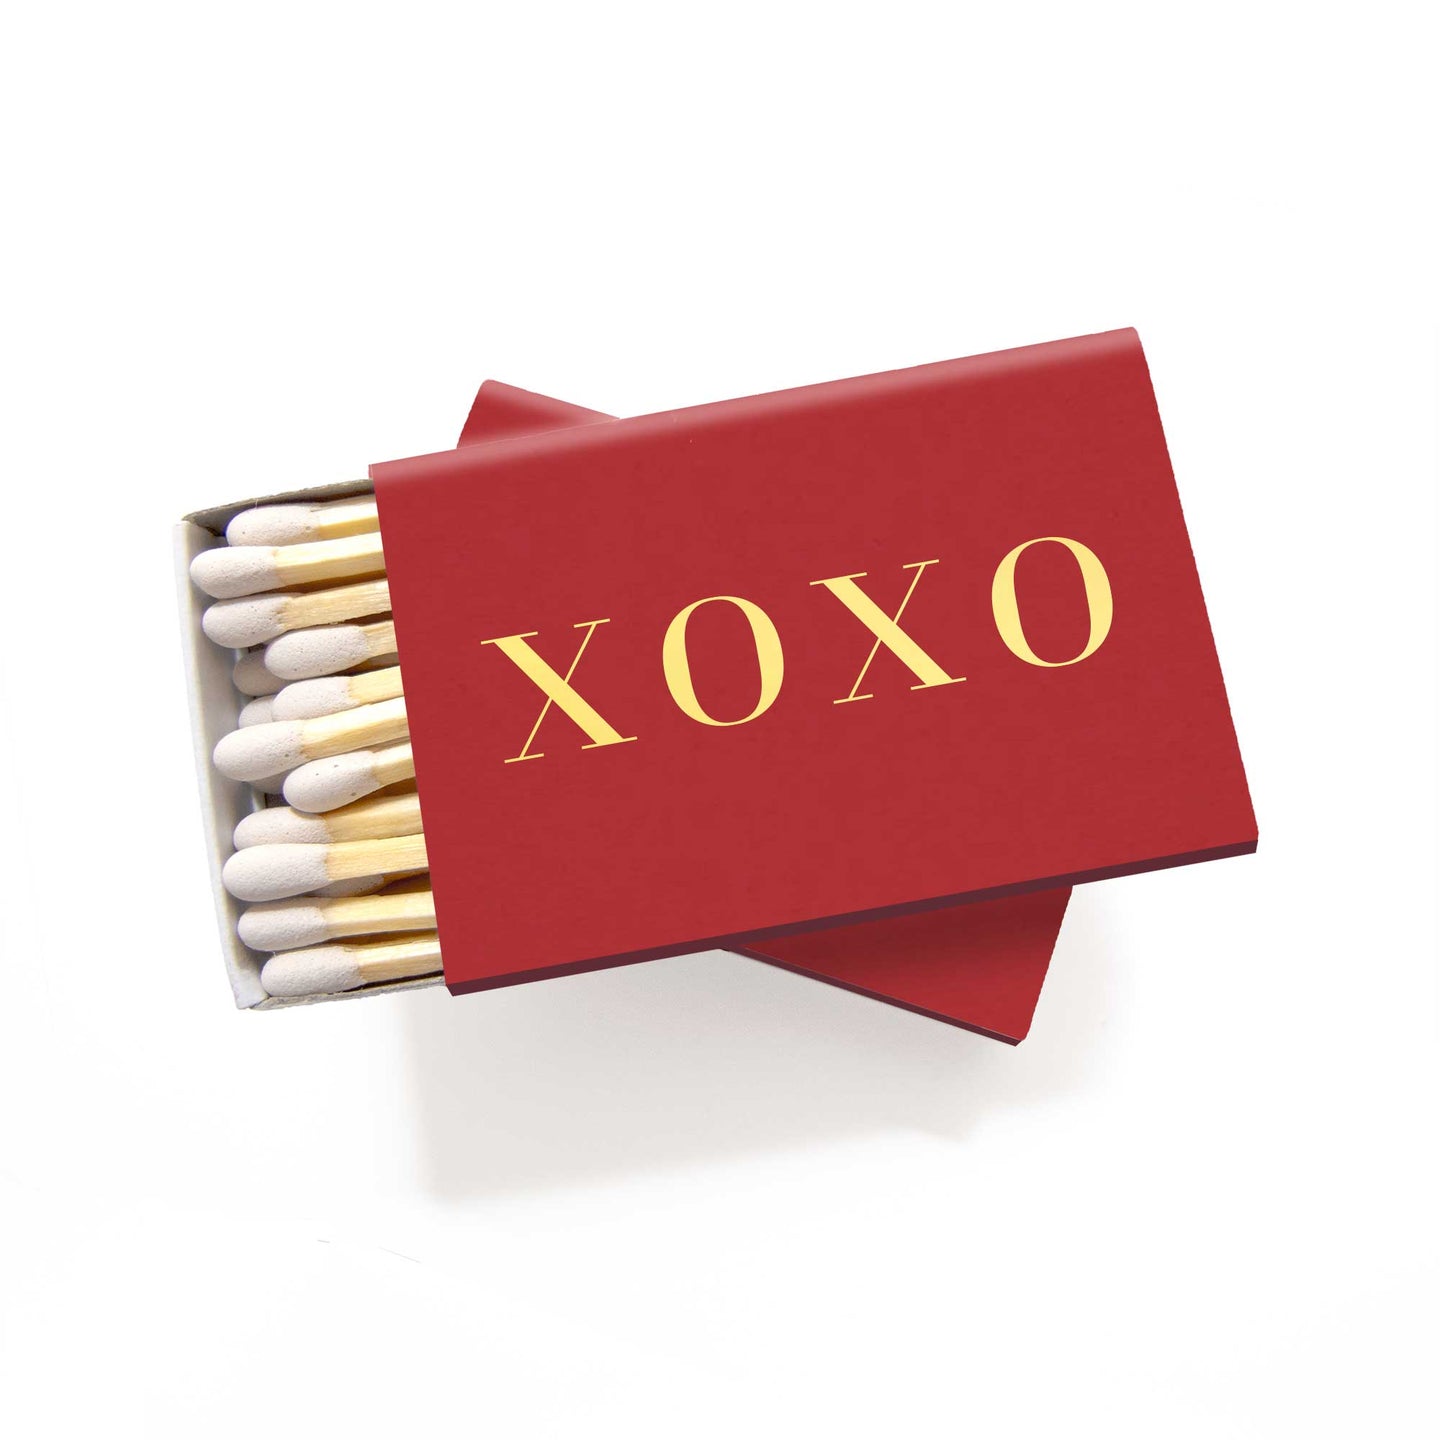 XOXO Matchbox for Valentine's Day